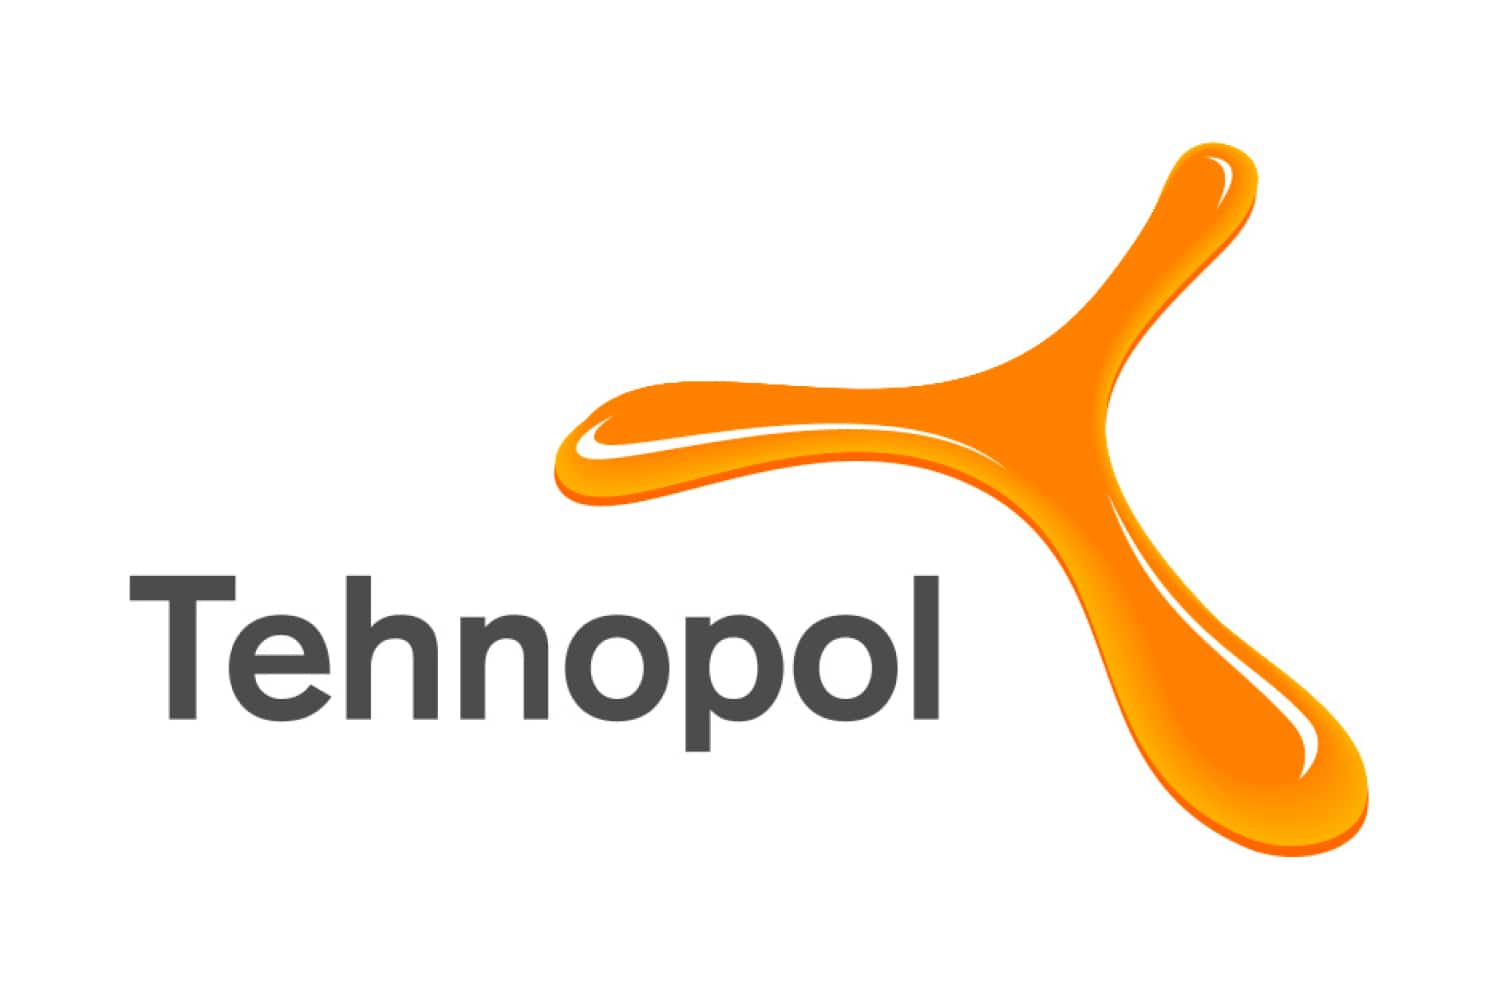 Technopol logo